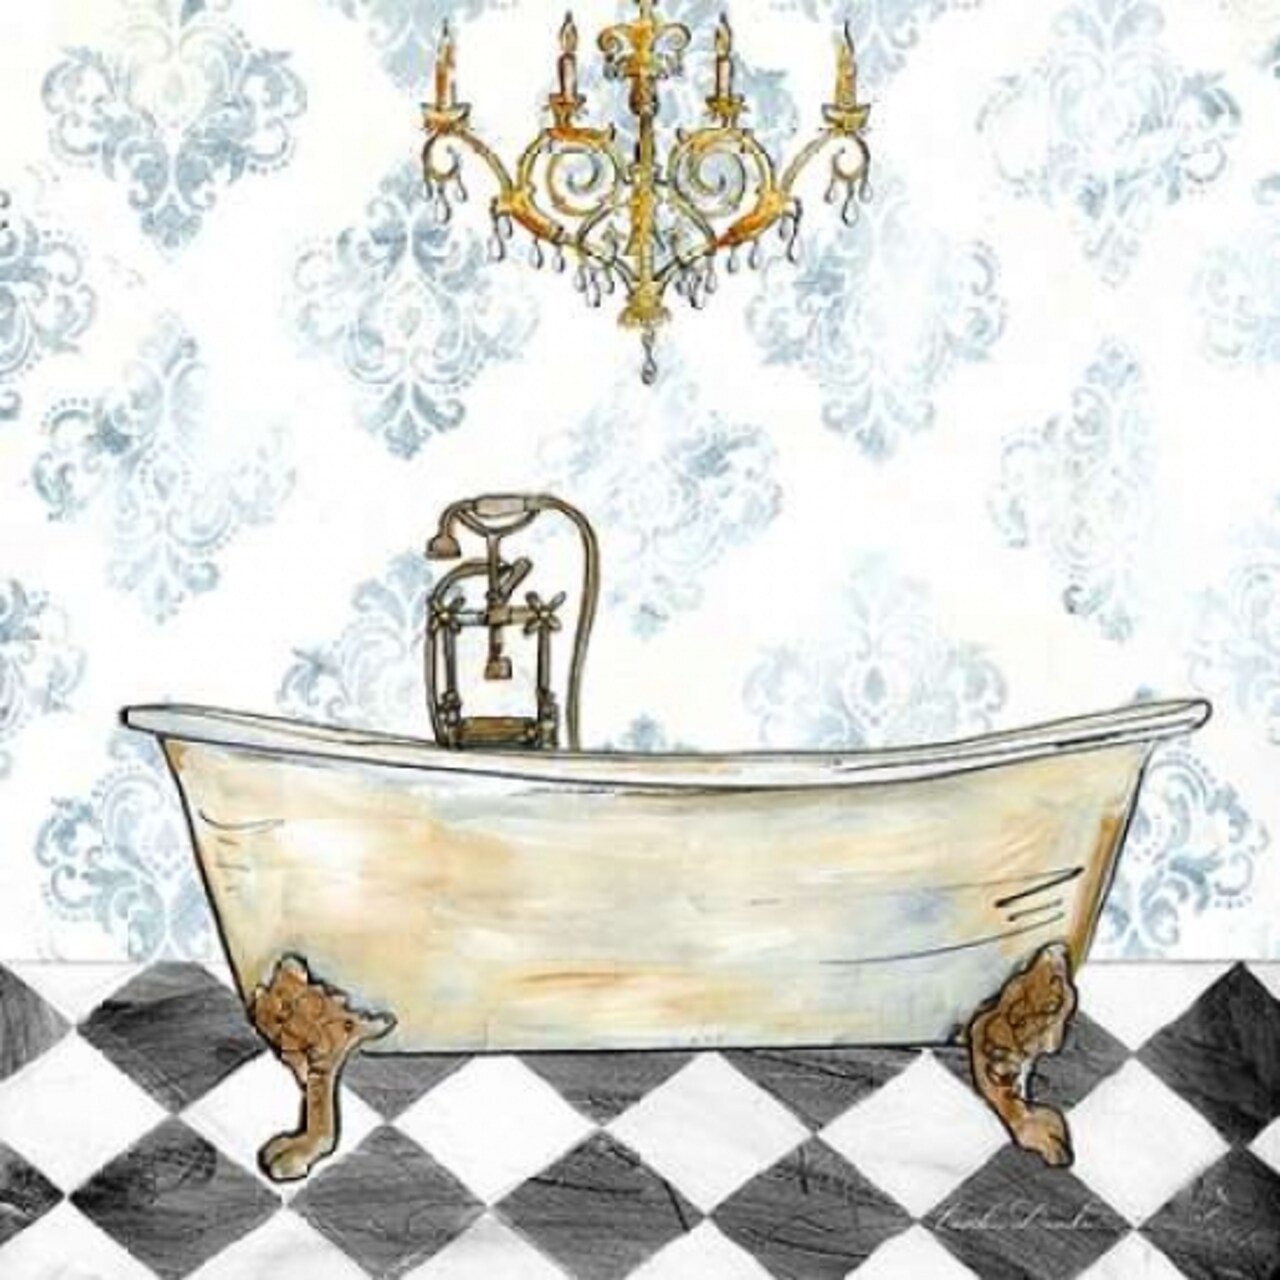 Checkerboard Bath I Poster Print by Caitlin Dundon - Item # VARPDXRB10865CTL